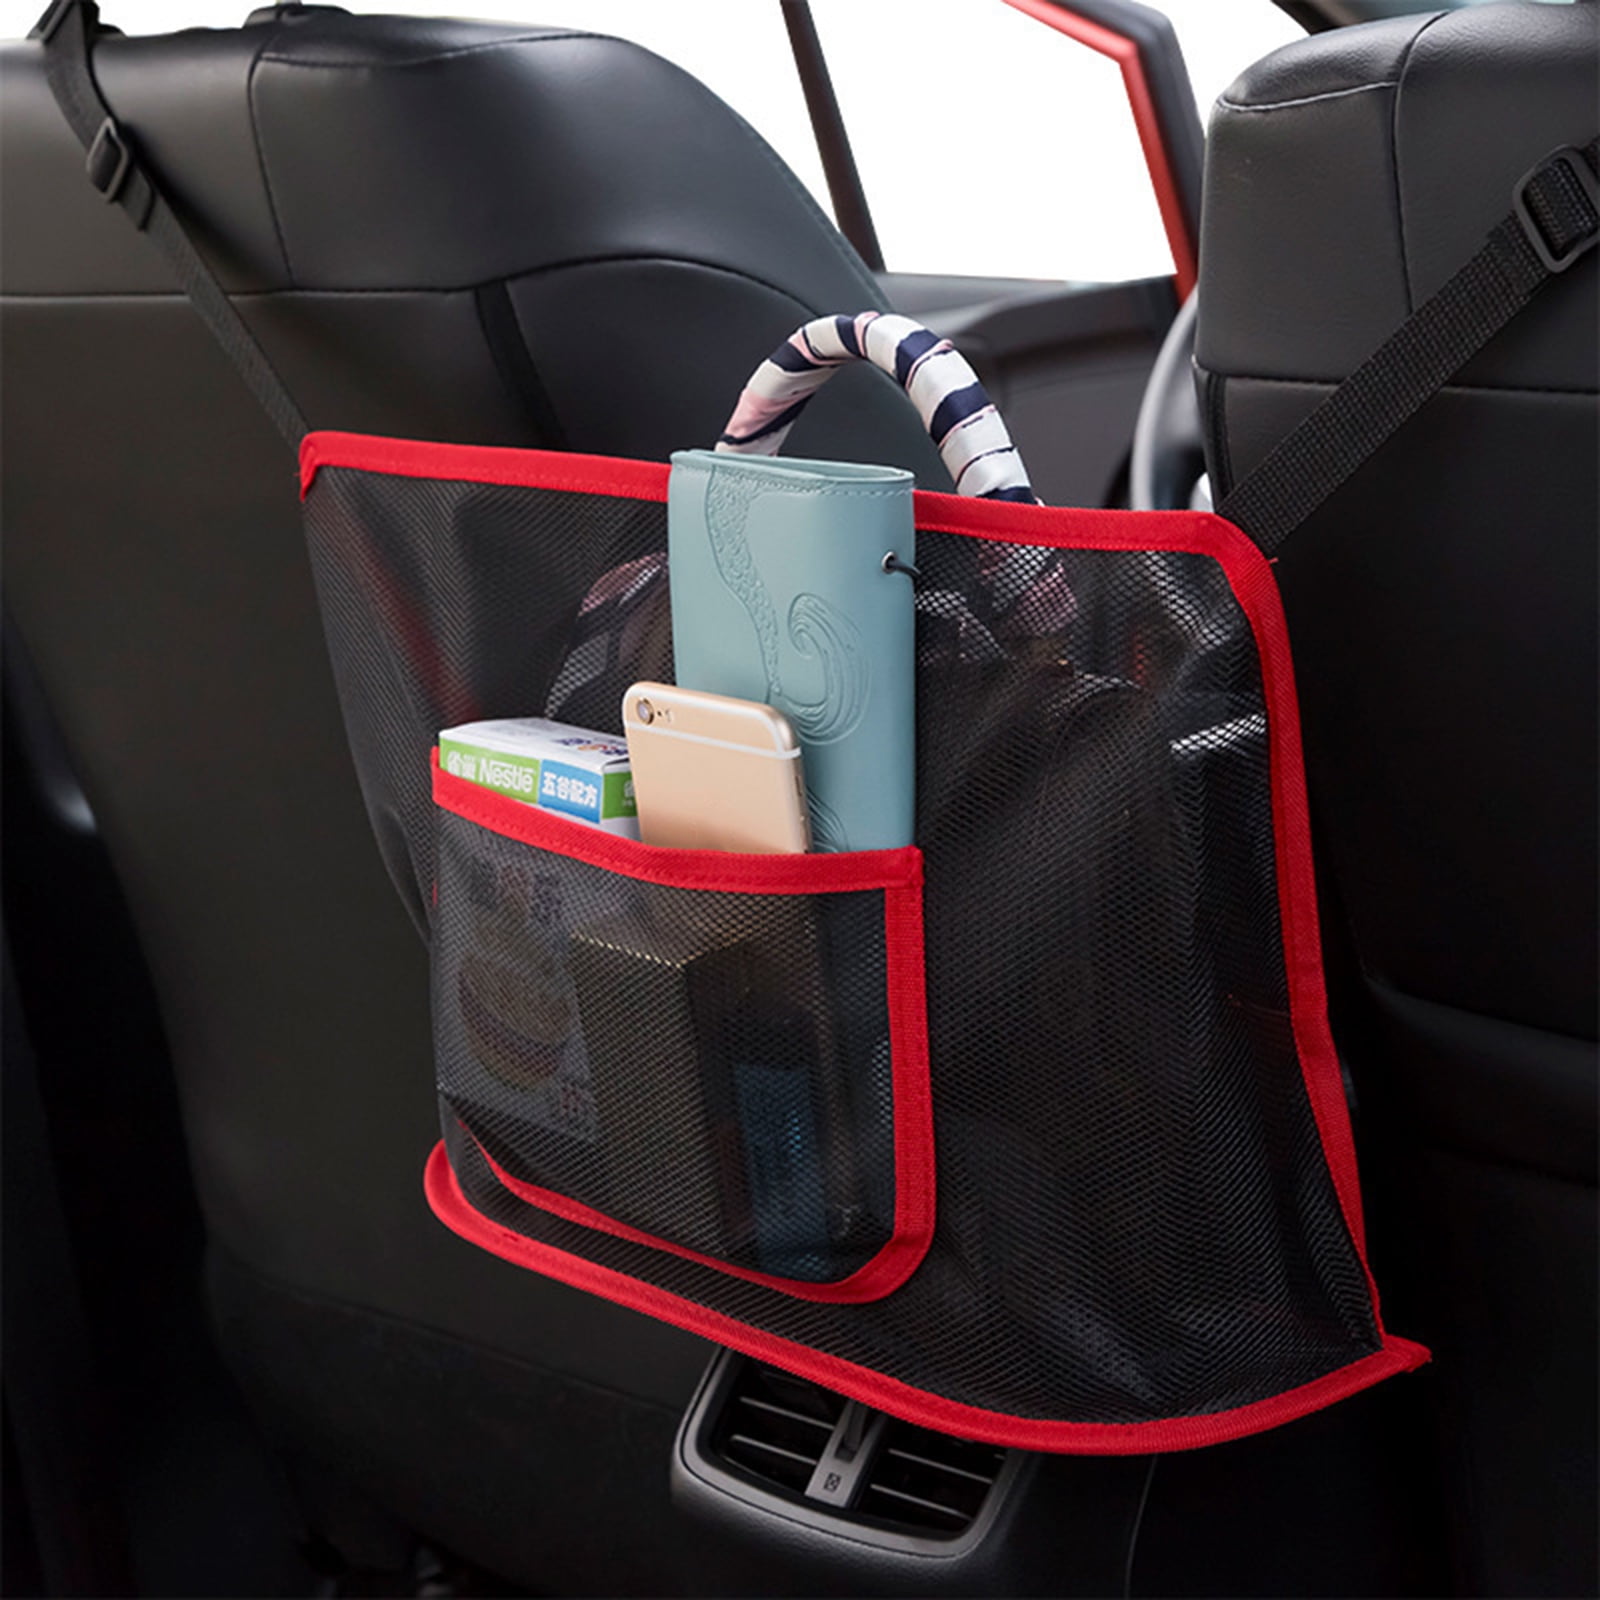 Car Net Pocket Handbag Holder Organizer Seat Side Storage Mesh Net Bag 